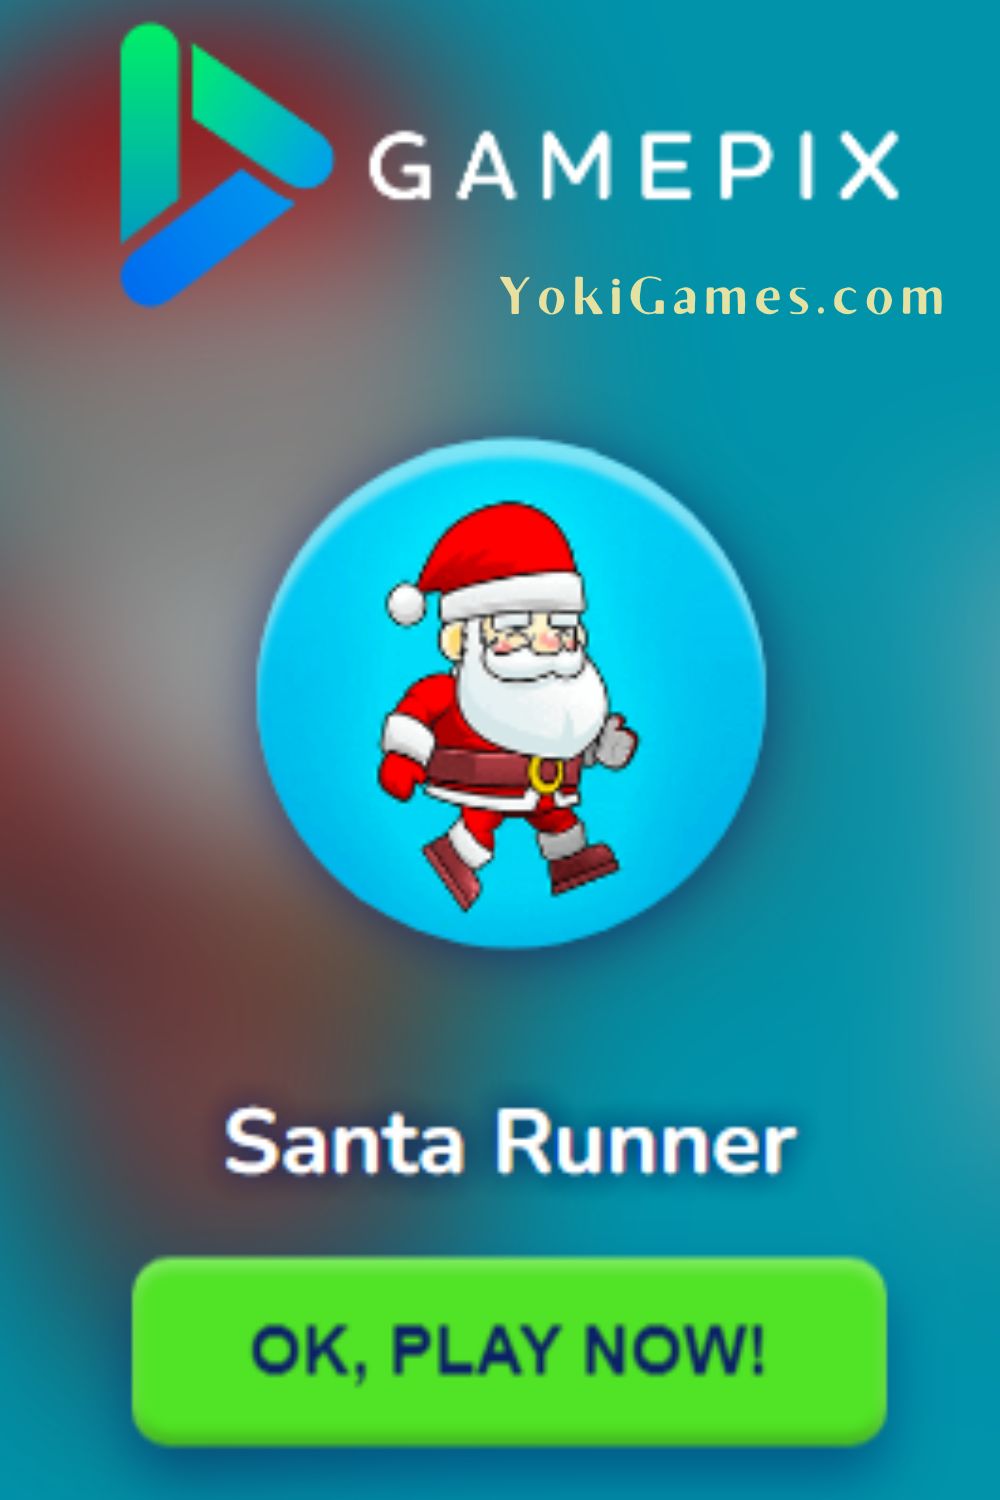  Why Play Santa Runner on Yoki.games?